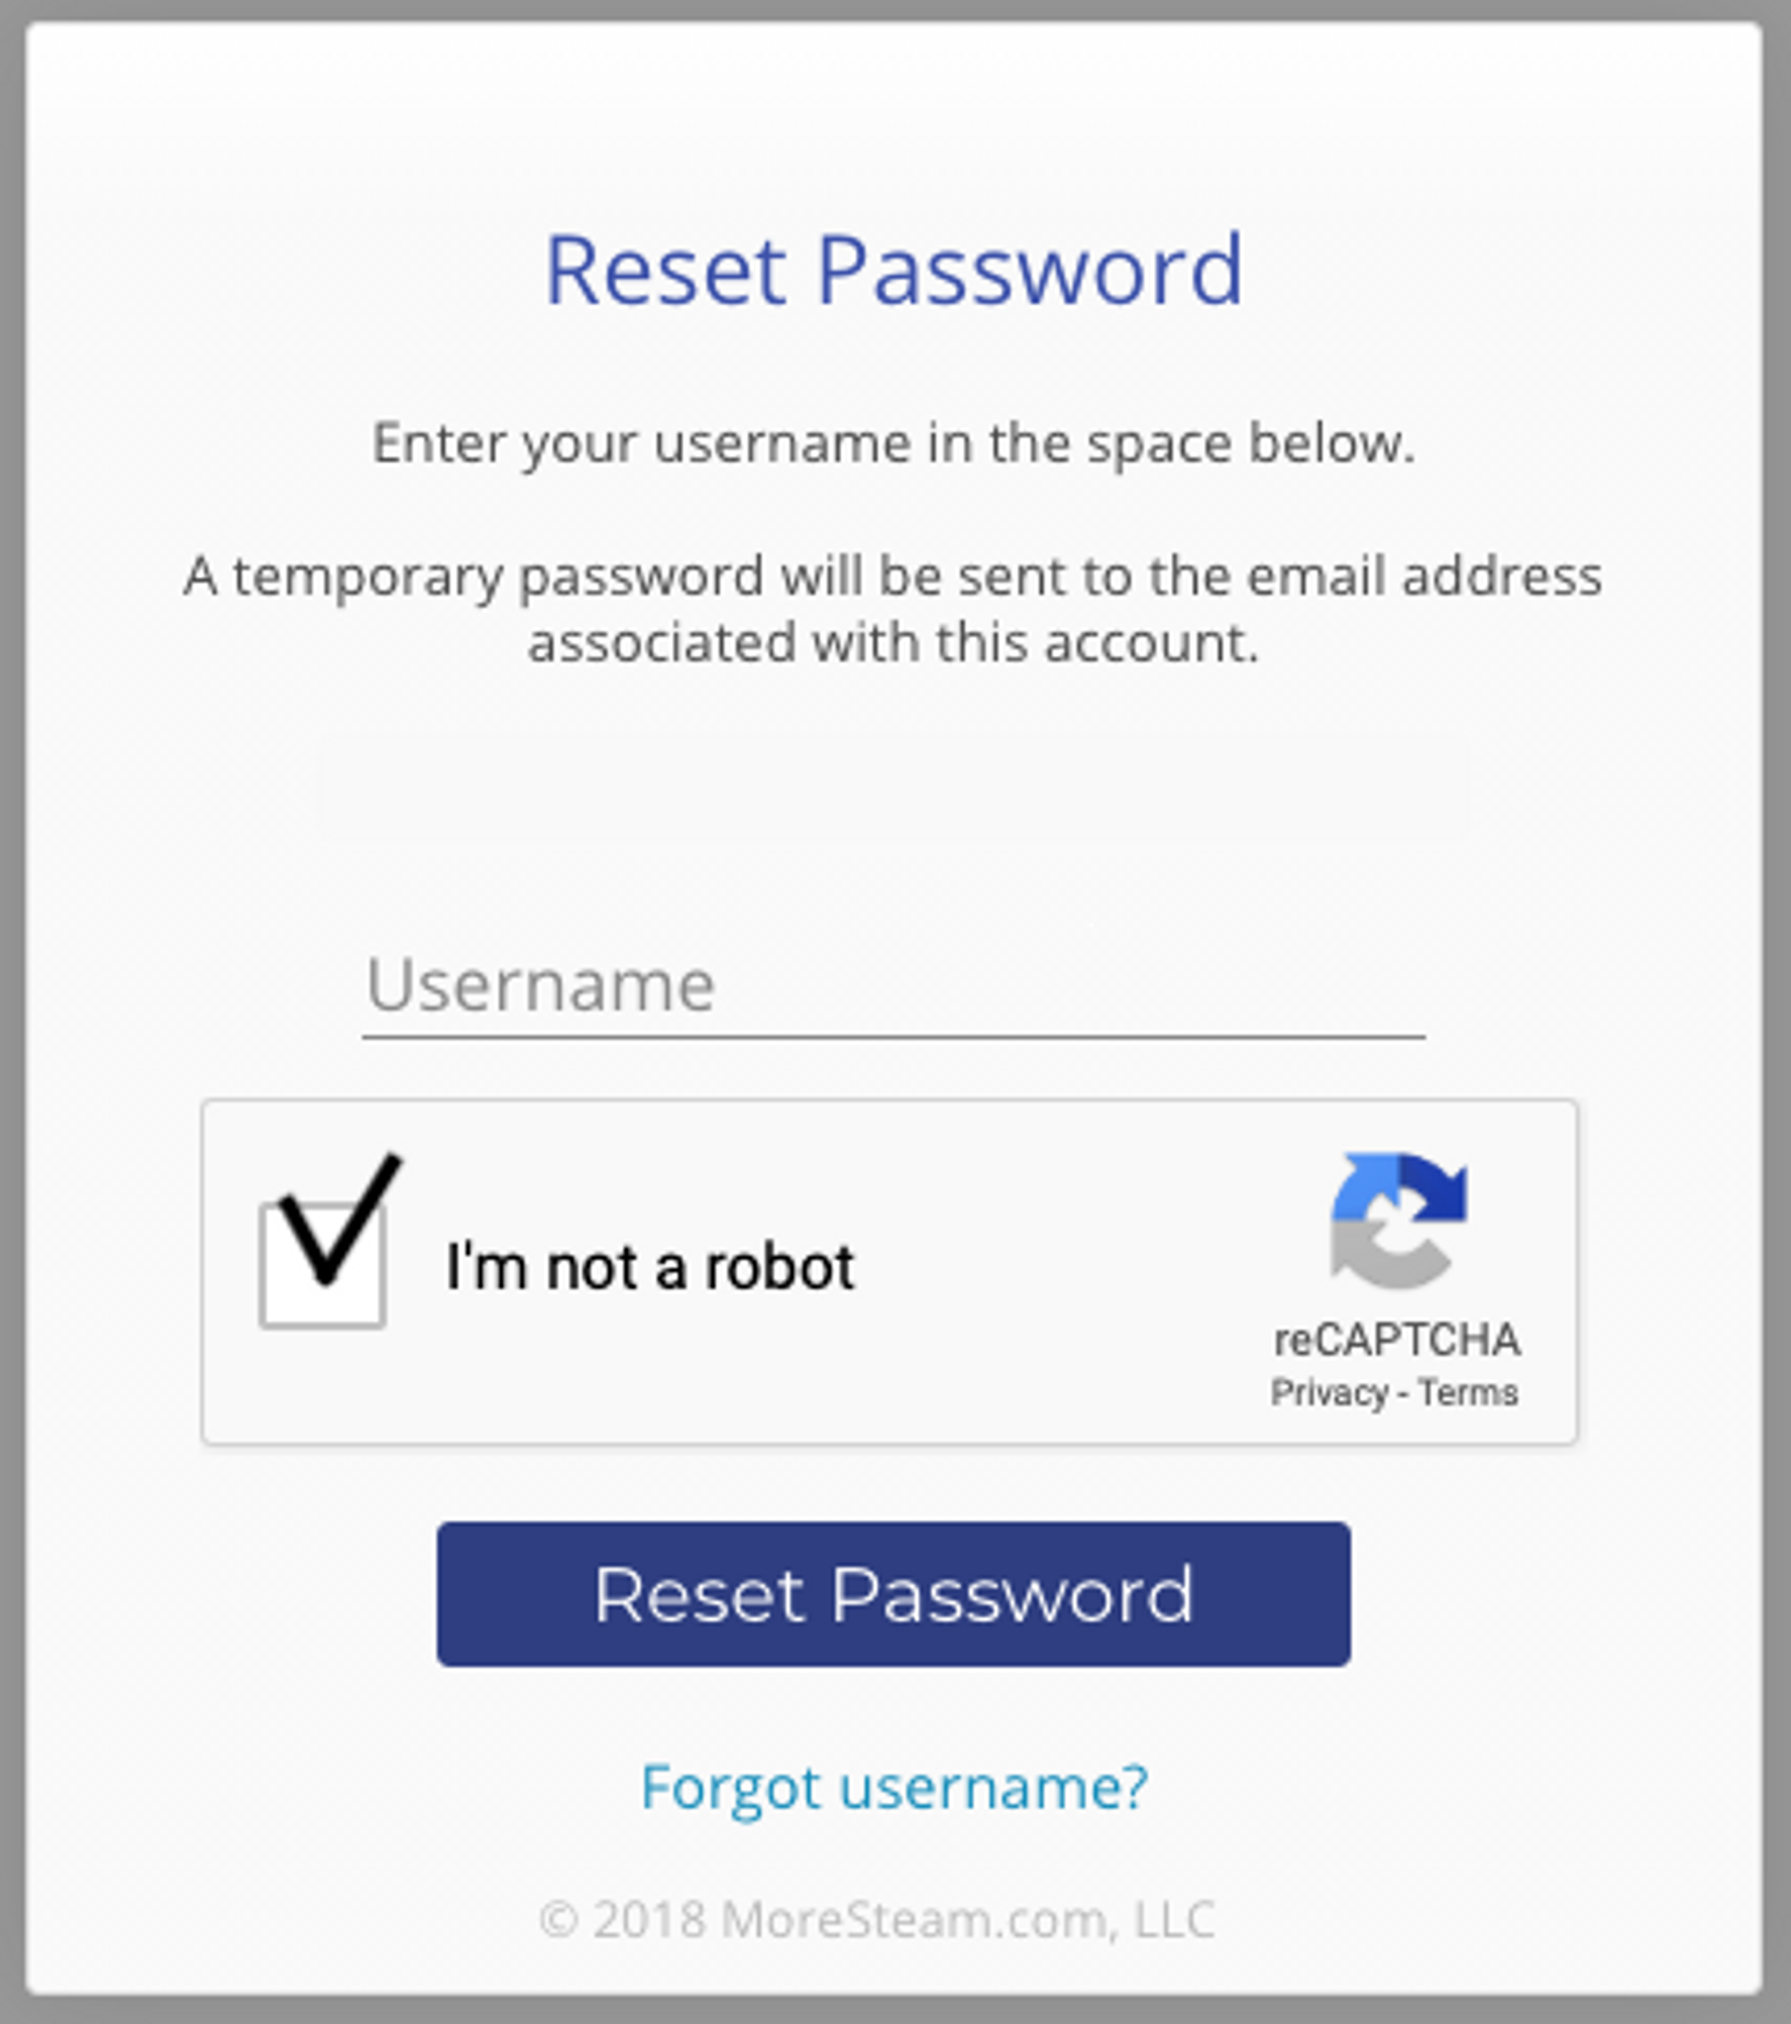 Resetting password